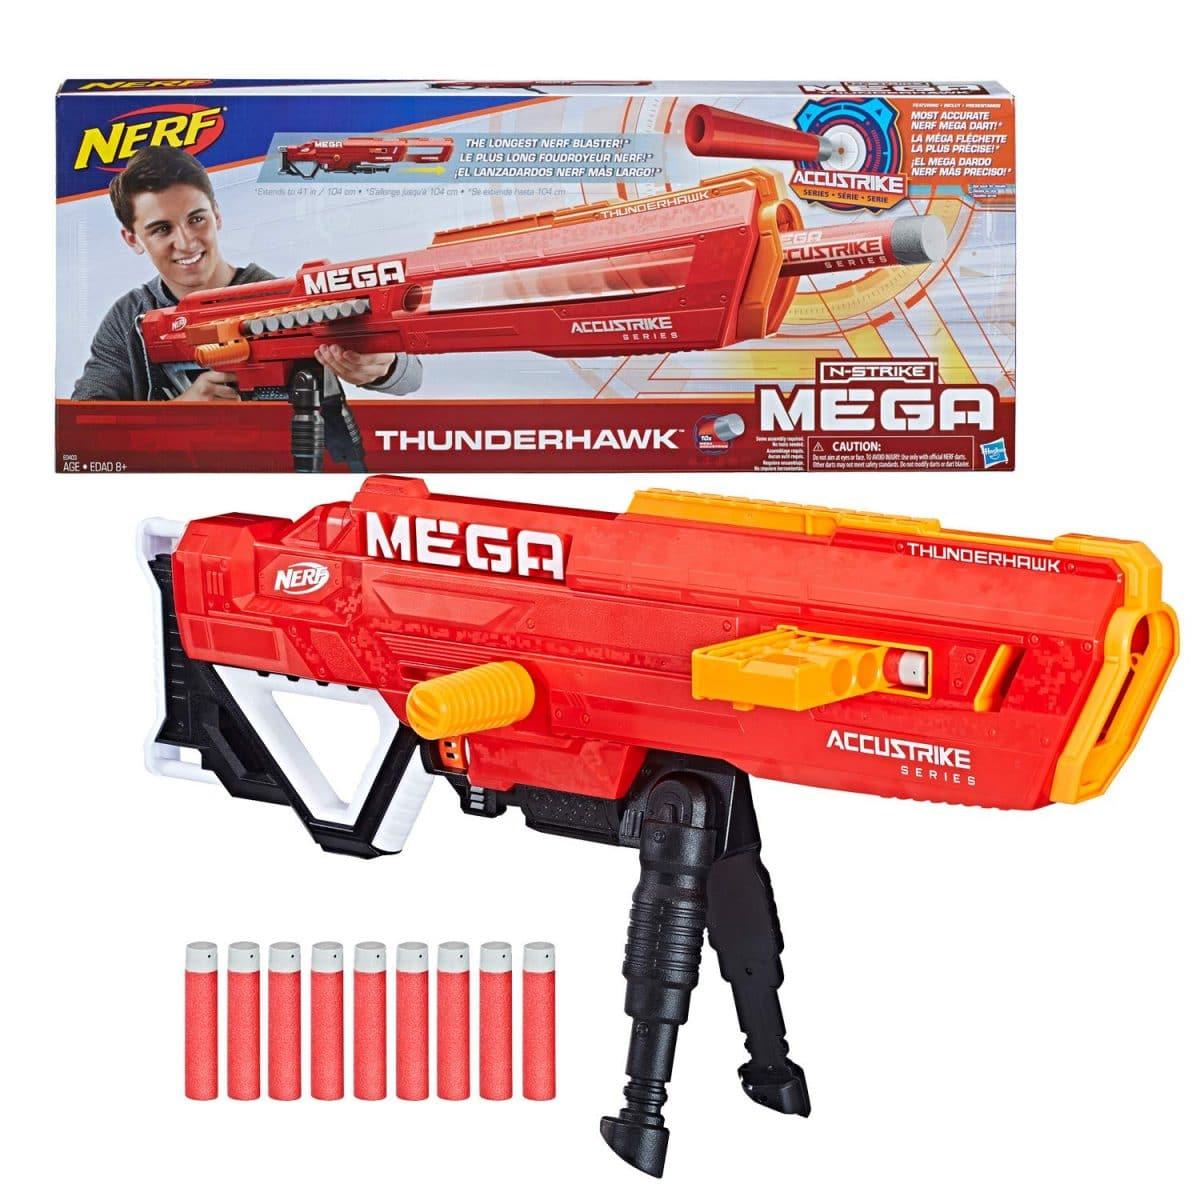 Thunderhawk Nerf Accustrike Mega Toy Blaster